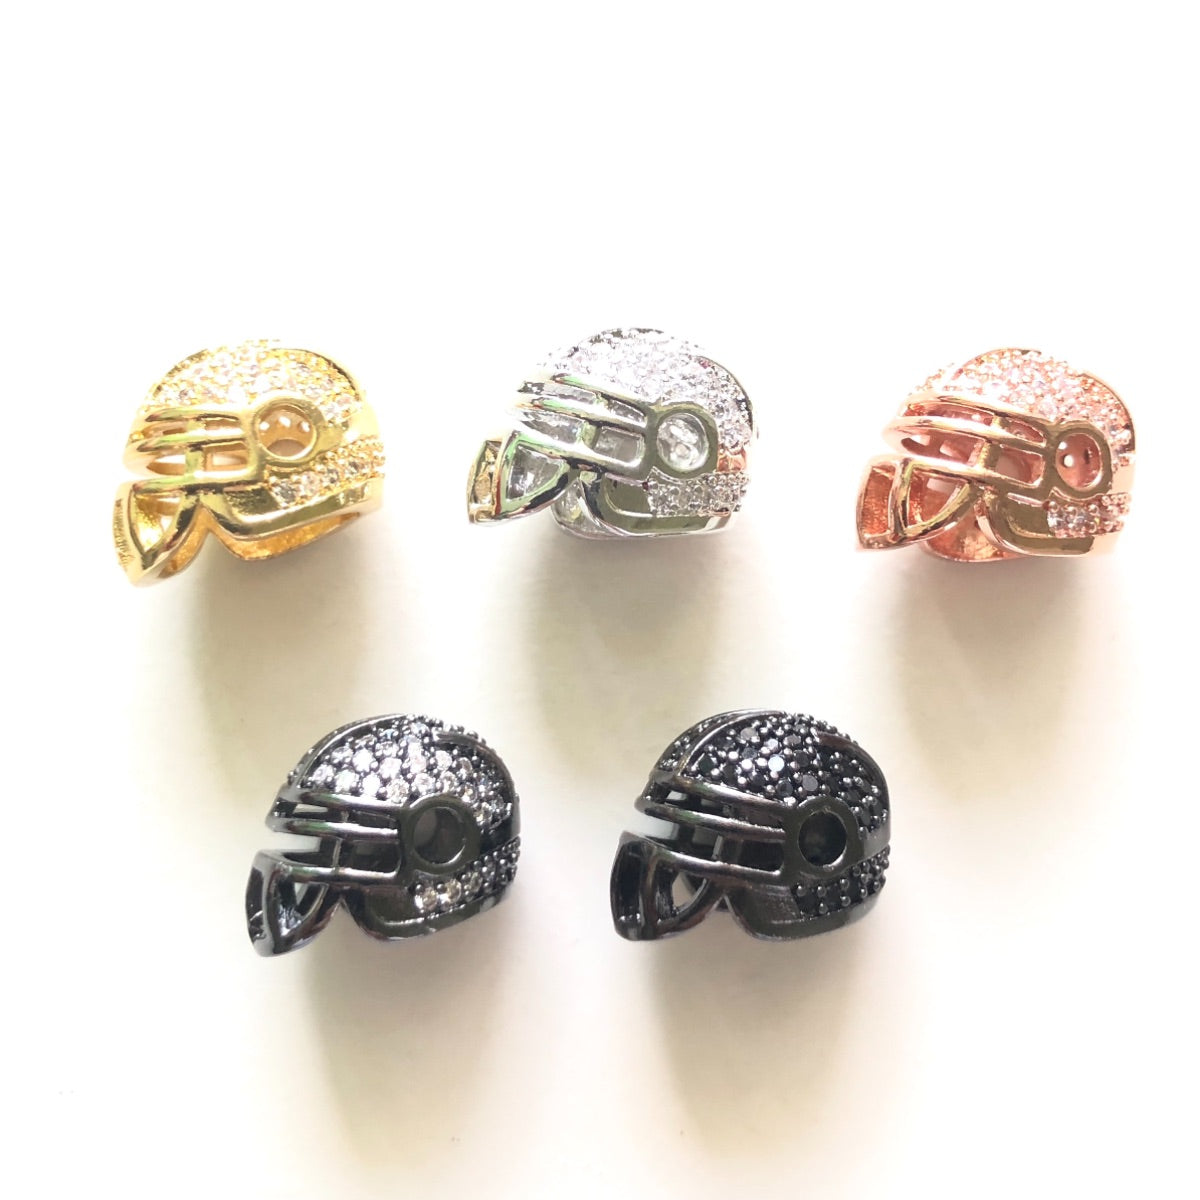 10pcs/lot 14*10mm CZ Paved American Football Helmet Spacers Mix Colors CZ Paved Spacers American Football Sports Helmet Spacers Charms Beads Beyond